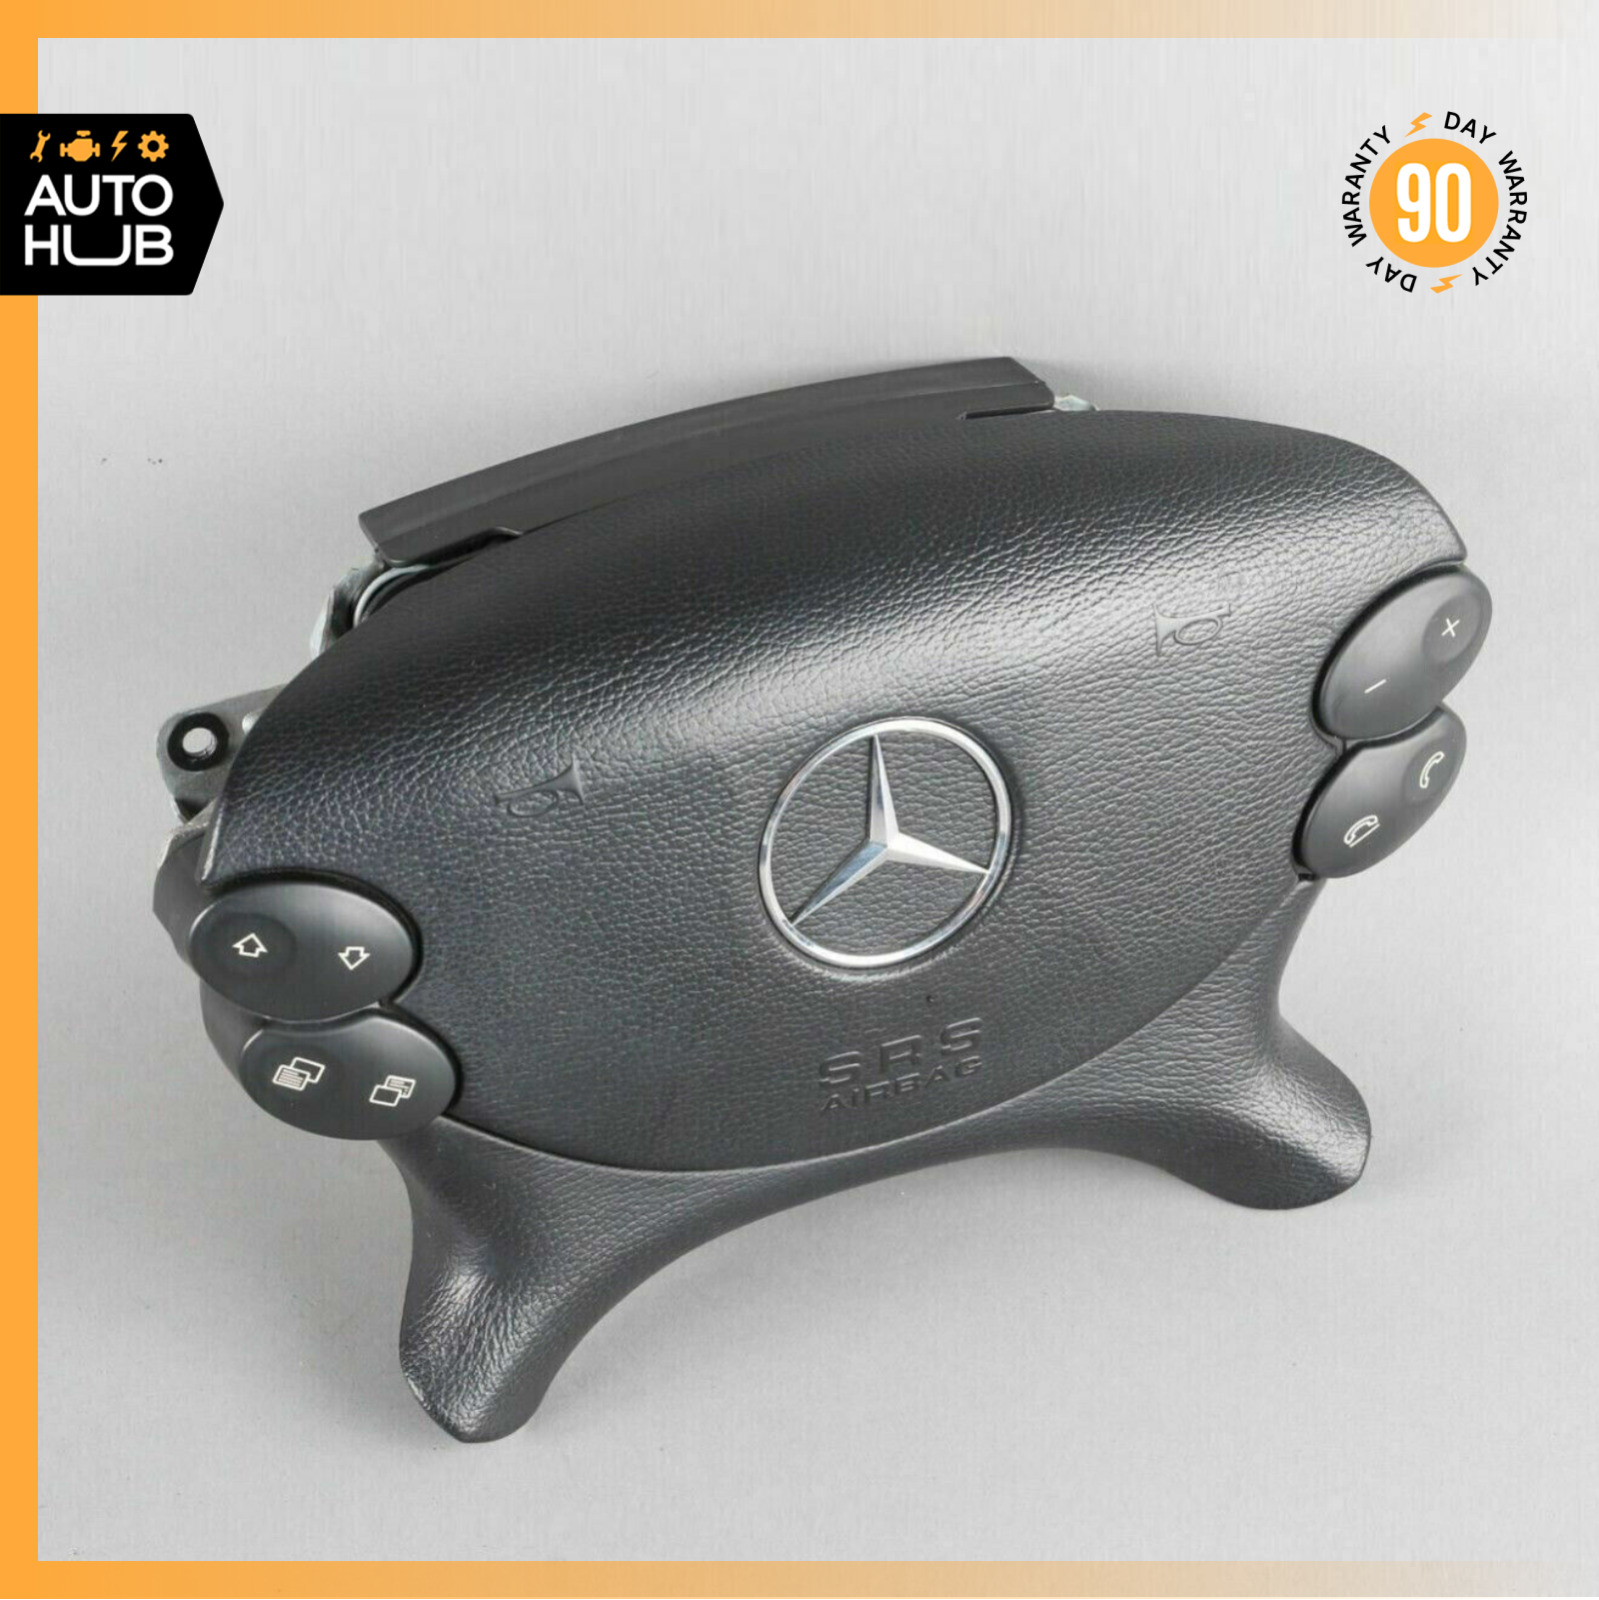 Mercedes W211 CLK500 E350 SL500 Steering Wheel Airbag Air Bag Black OEM